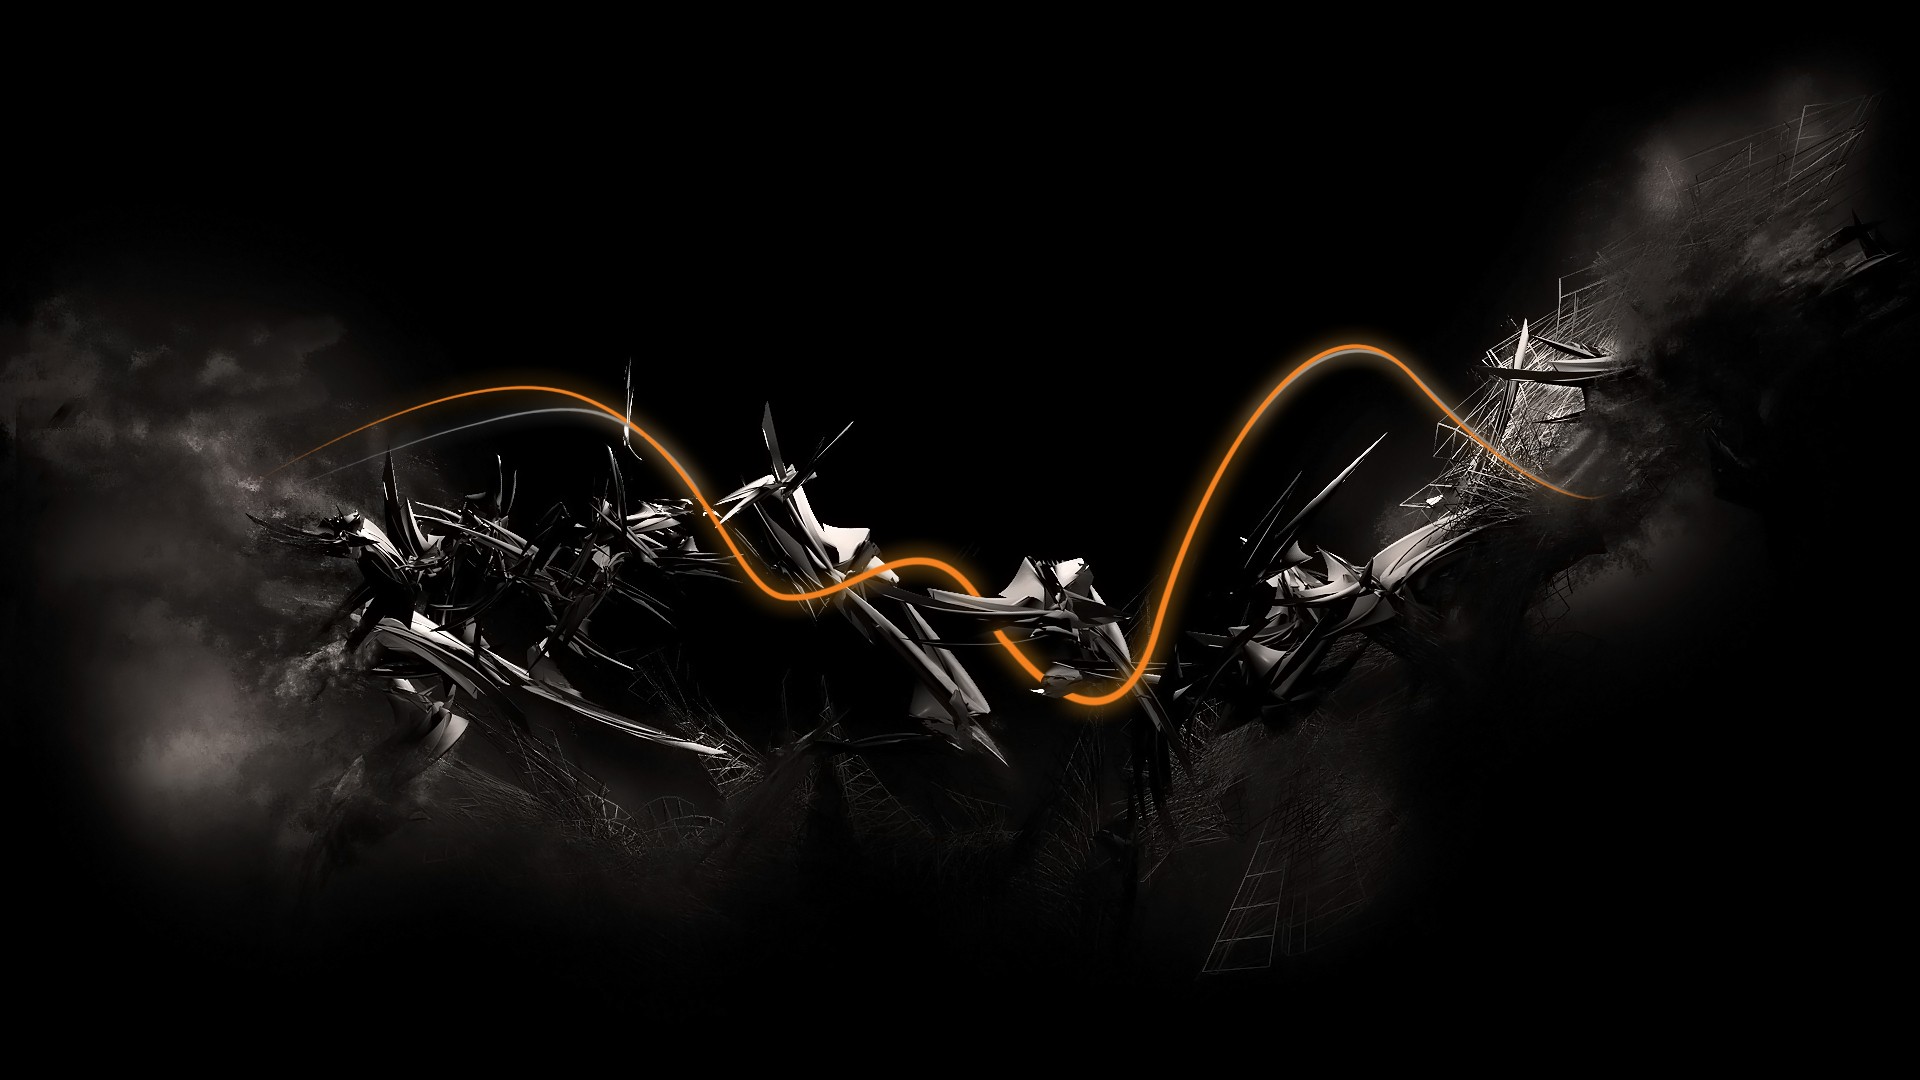 General 1920x1080 abstract digital art black background orange waves CGI mist artwork shapes lines